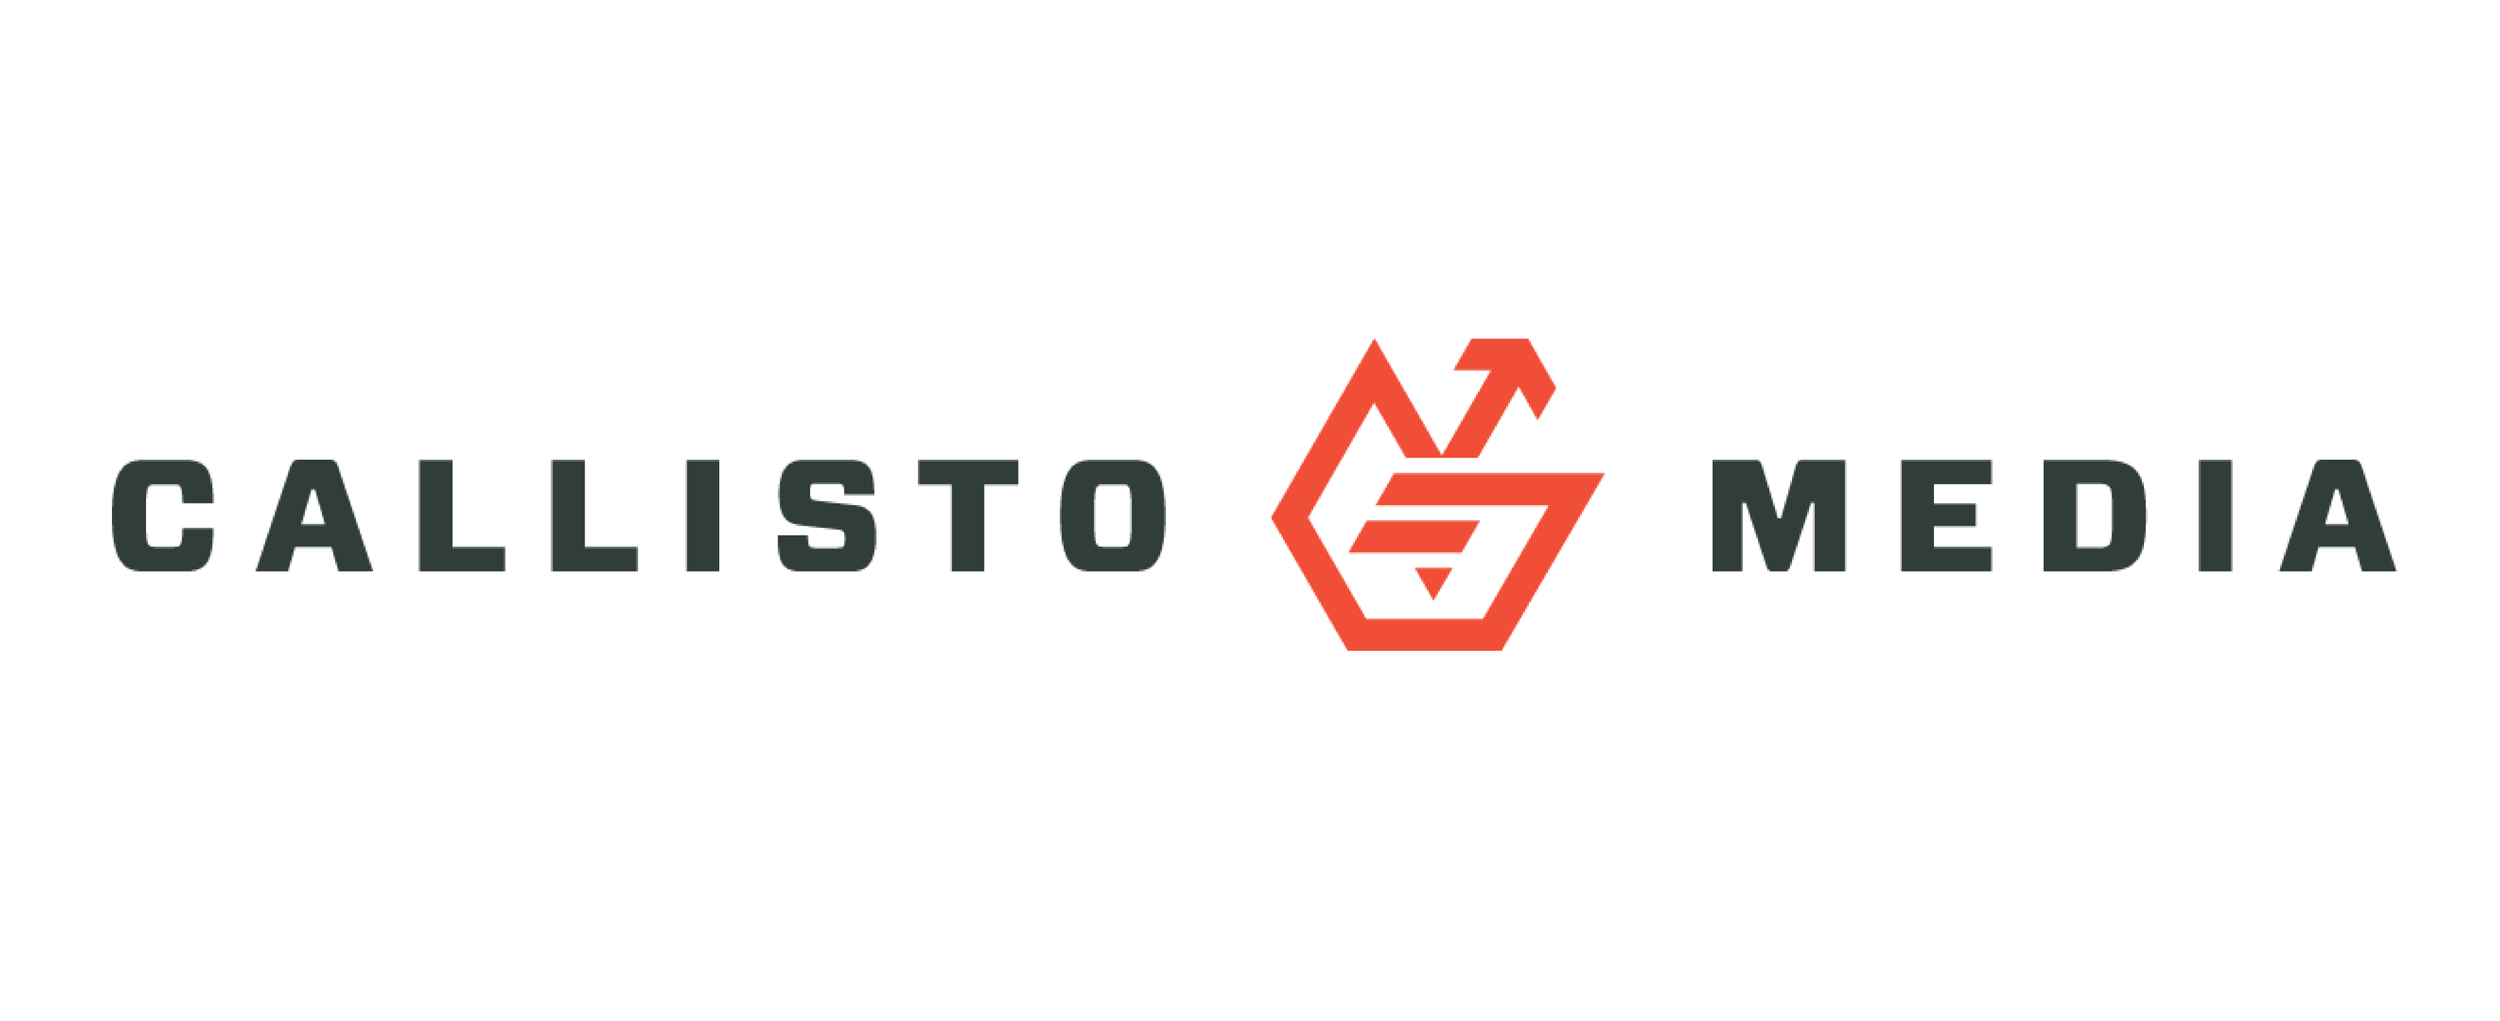 Callisto logo_size.png